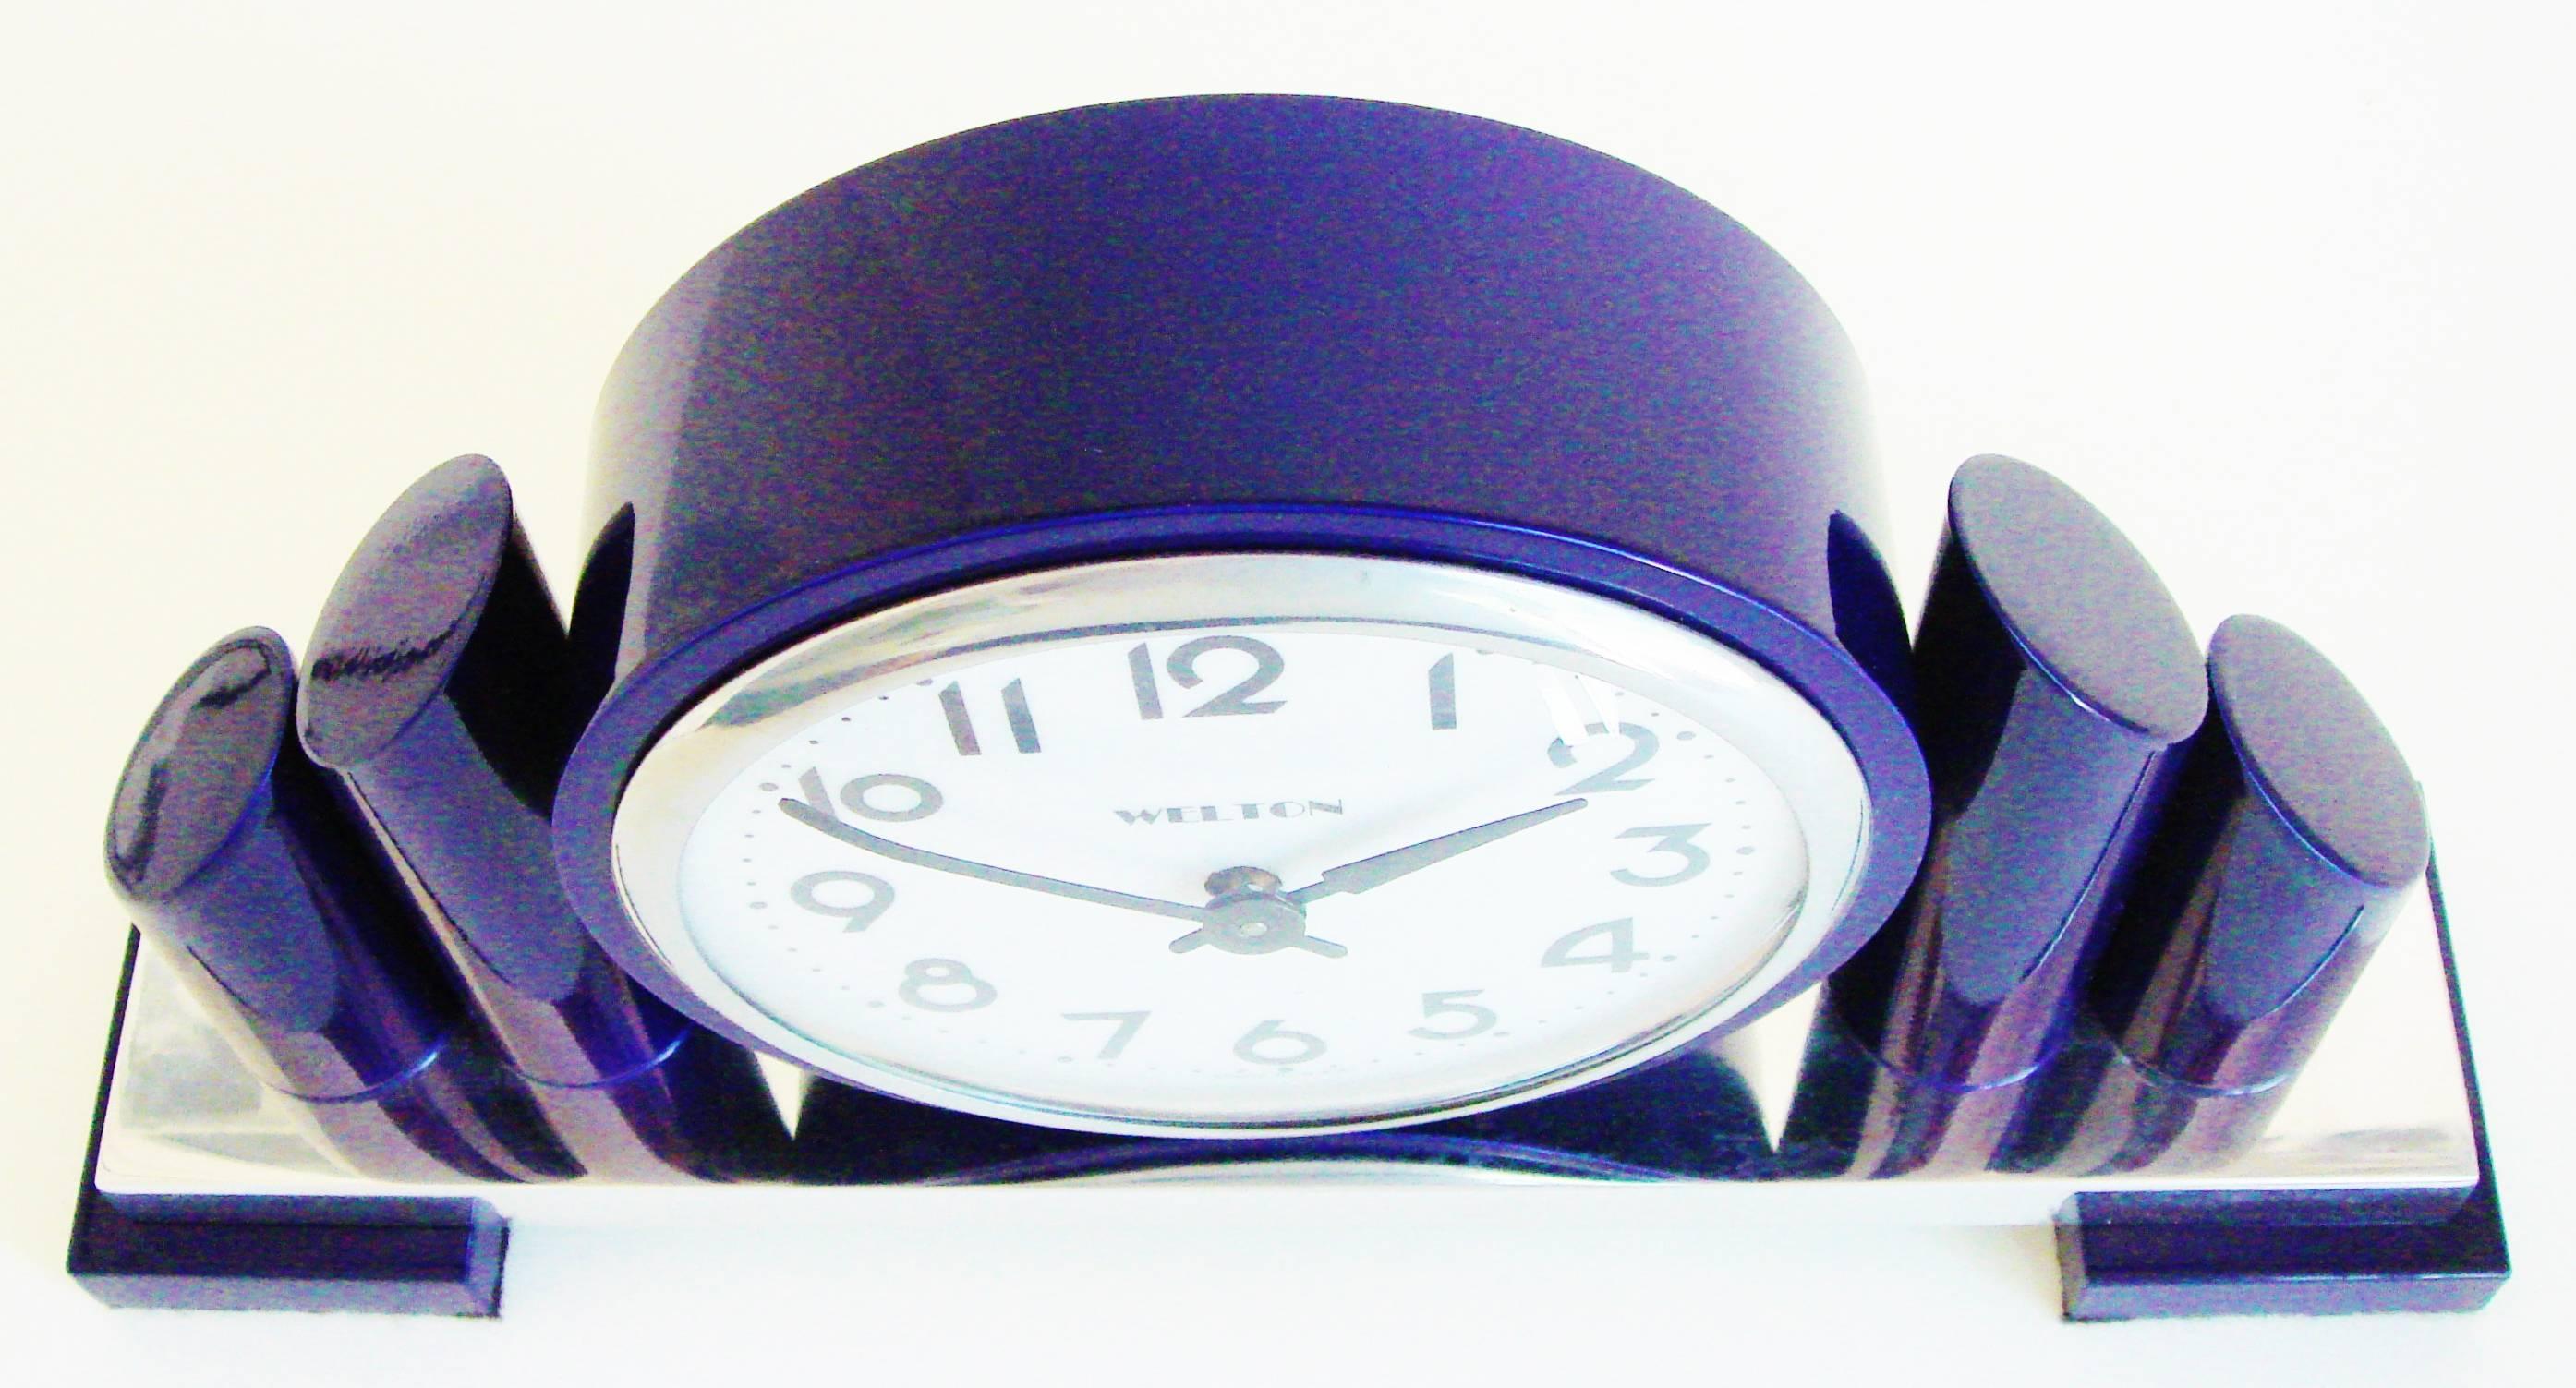 Mid-20th Century American Art Deco Revival Chrome & Blue Enamel Mechanical Mantel Clock by Welton For Sale